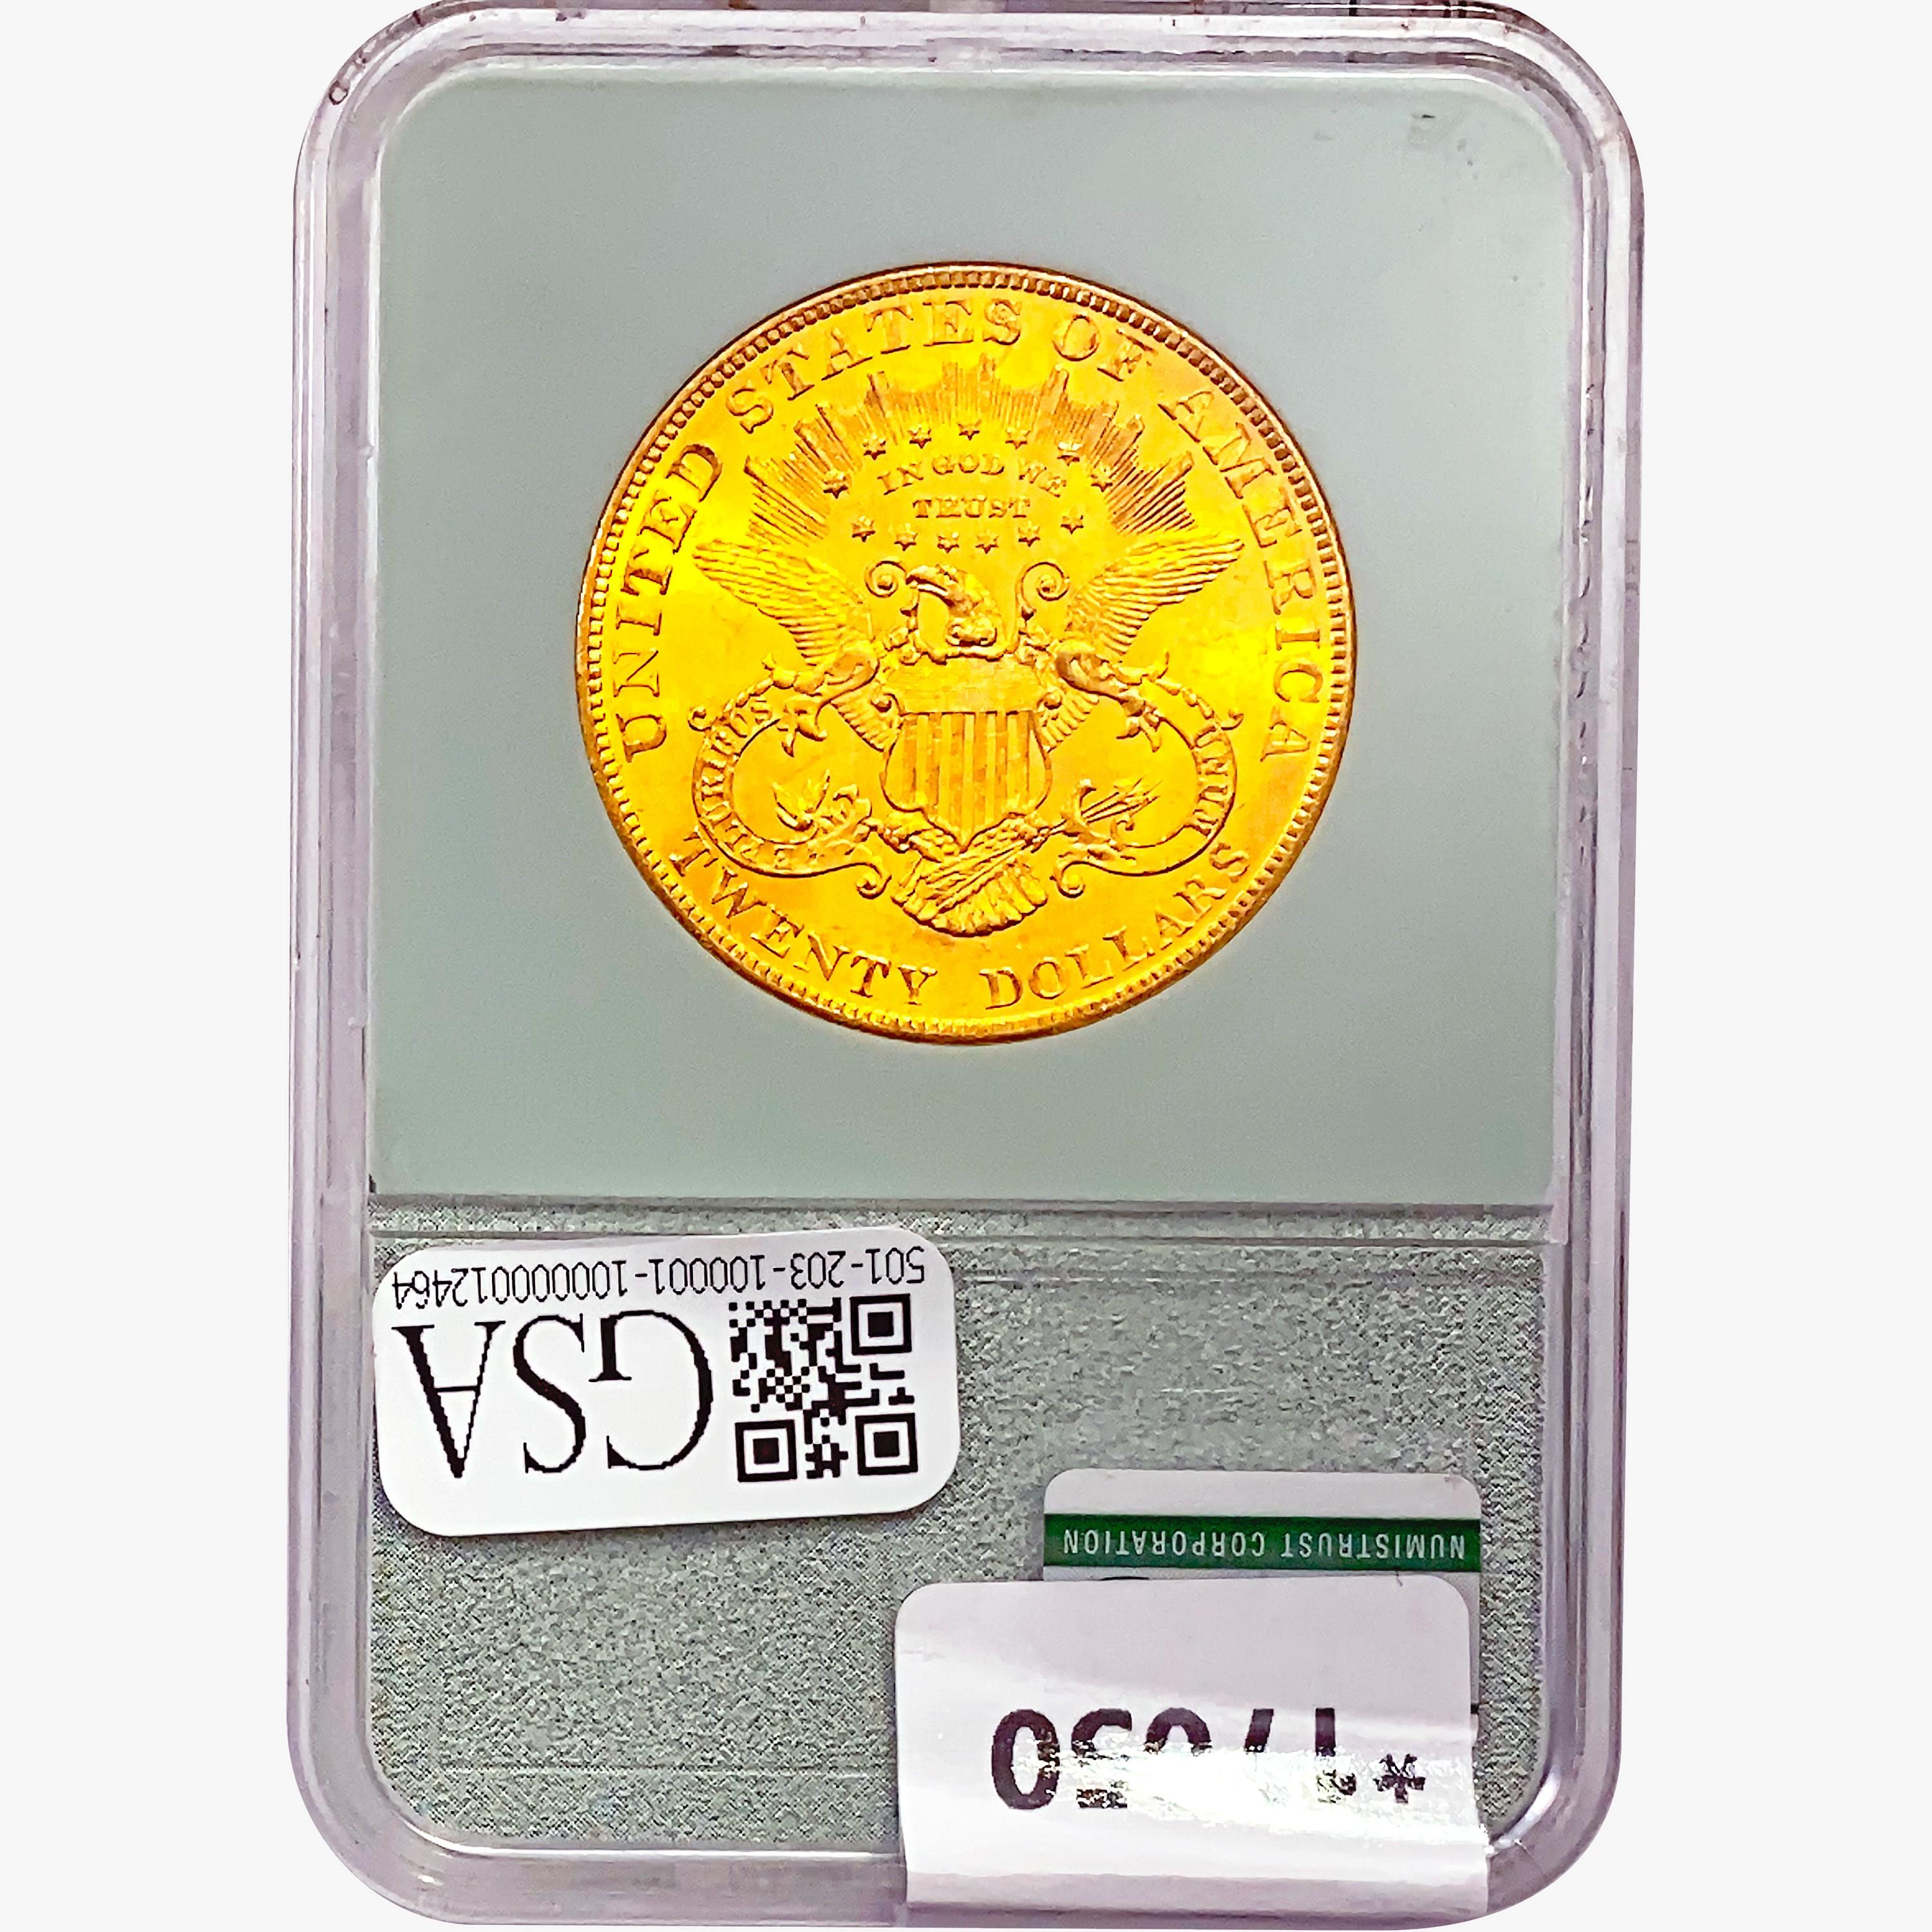 1904 $20 Gold Double Eagle NTC MS66